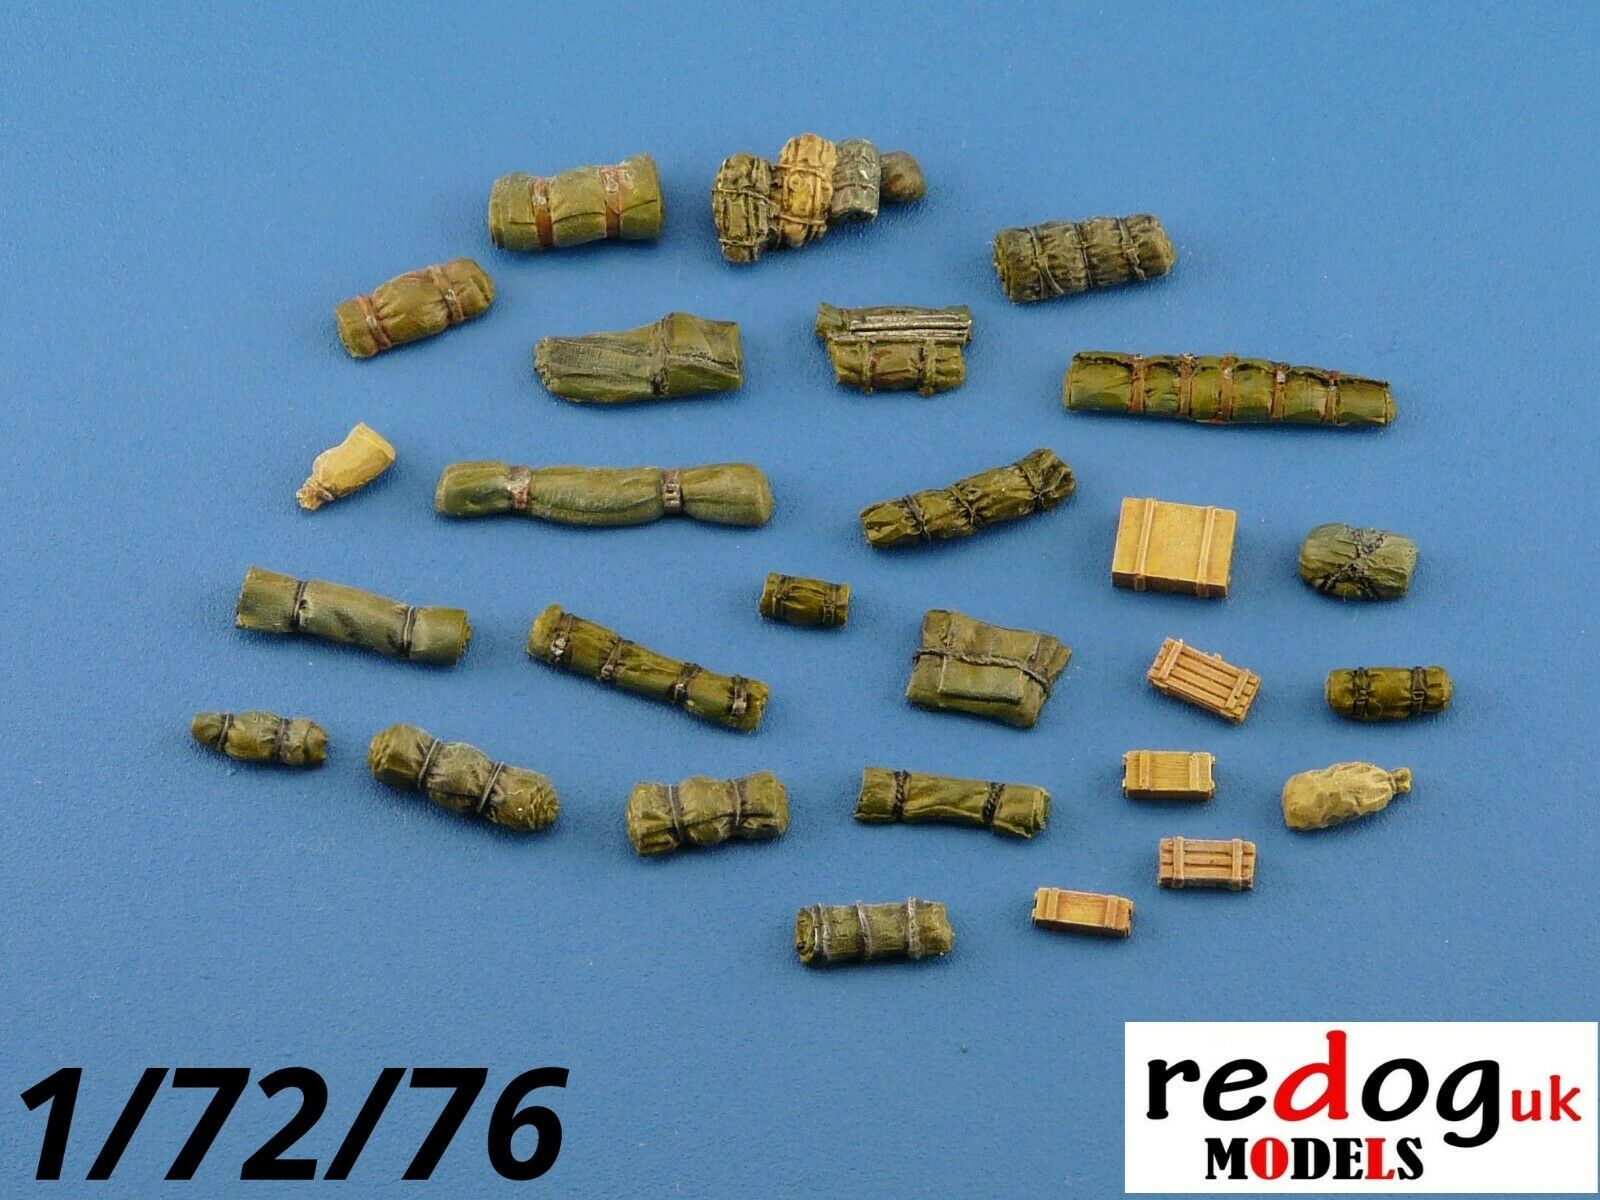 Redog 1:72 Military Scale Modelling Stowage Diorama Accessorises Detailing Kit - redoguk